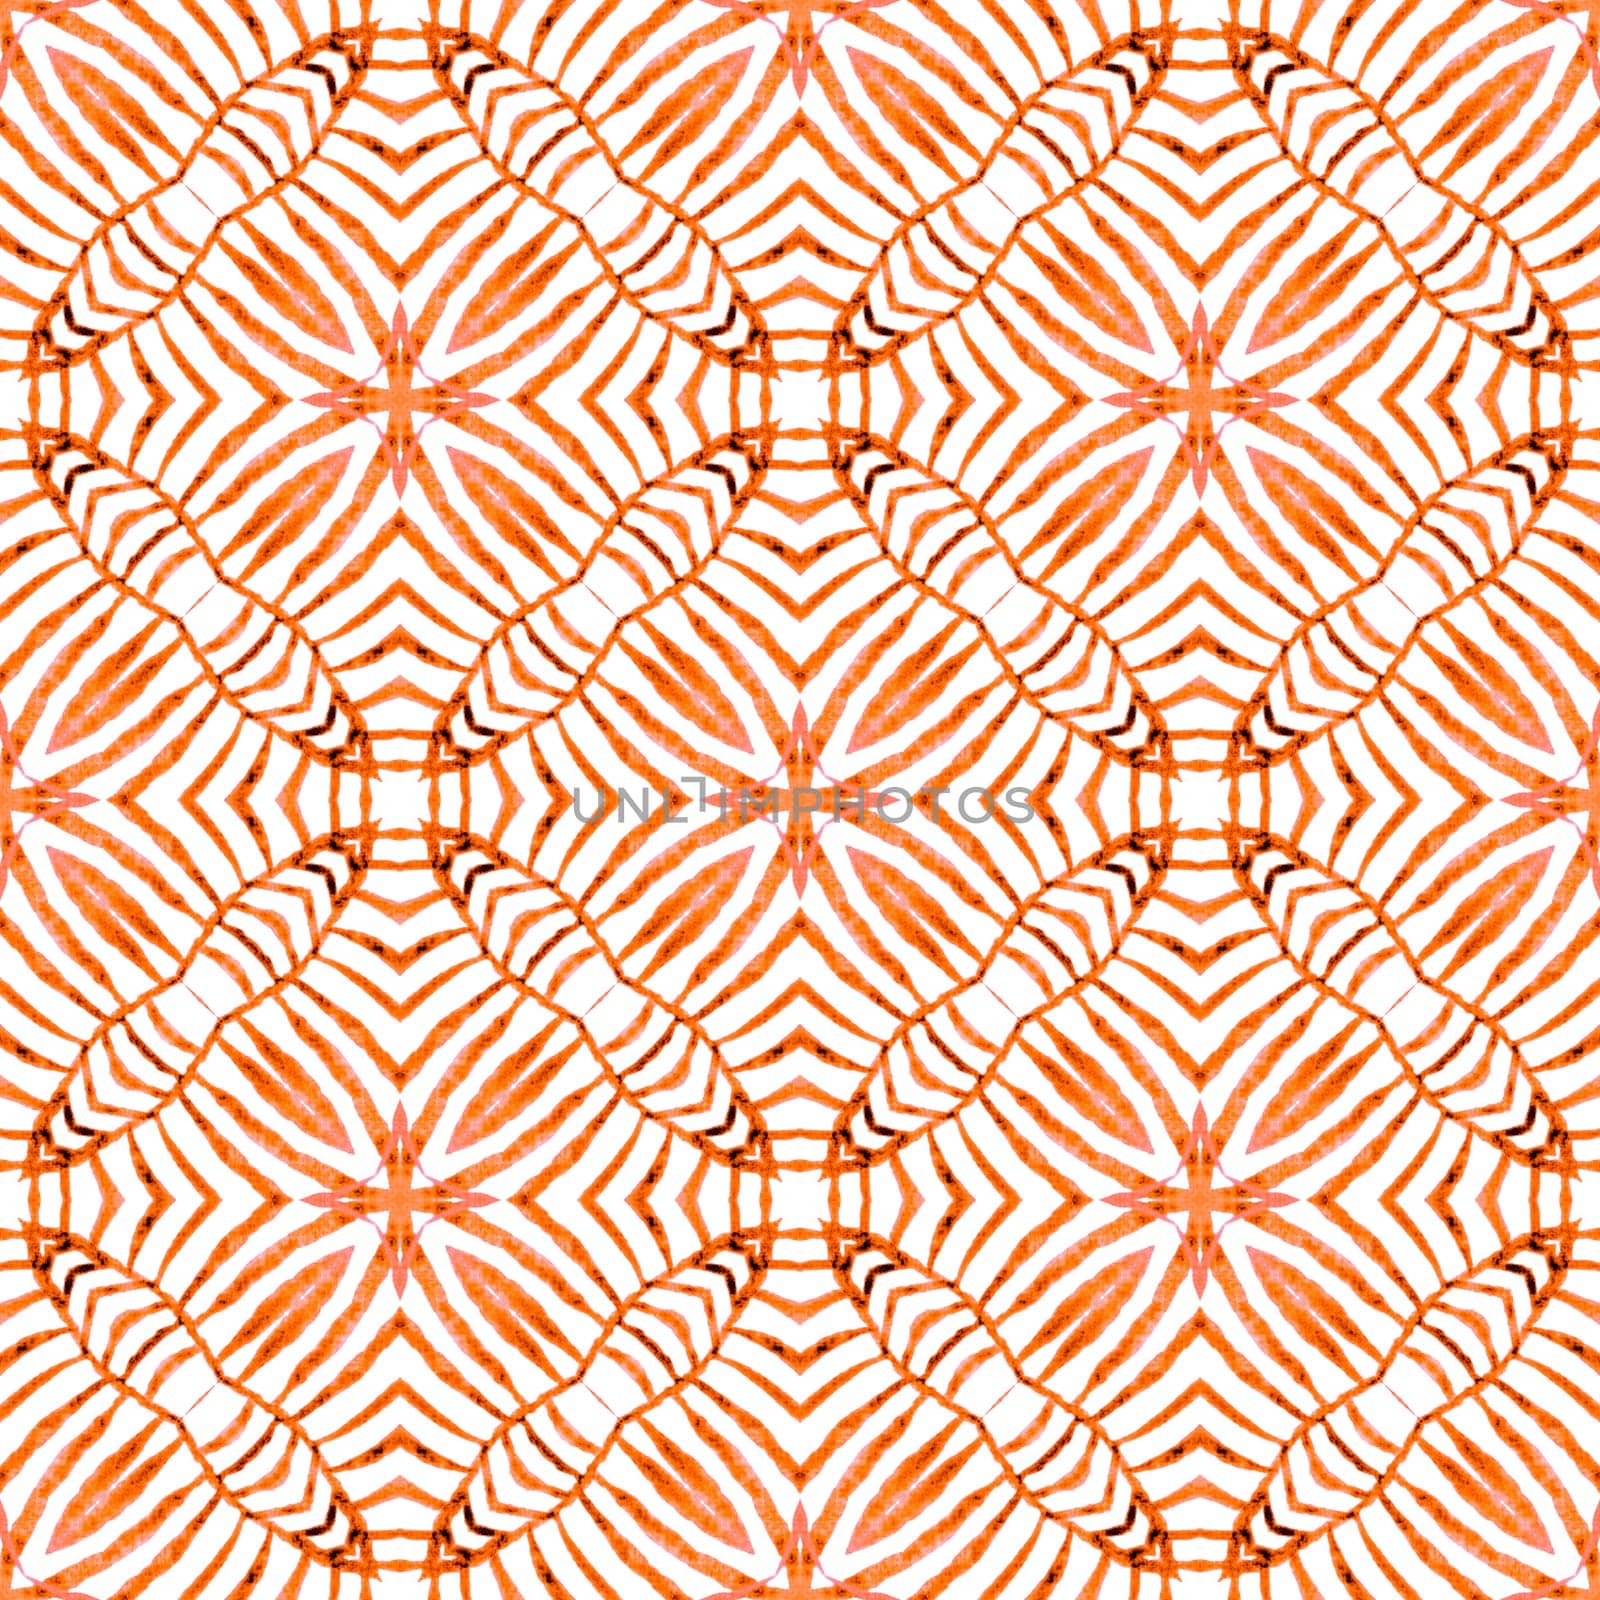 Organic tile. Orange good-looking boho chic by beginagain